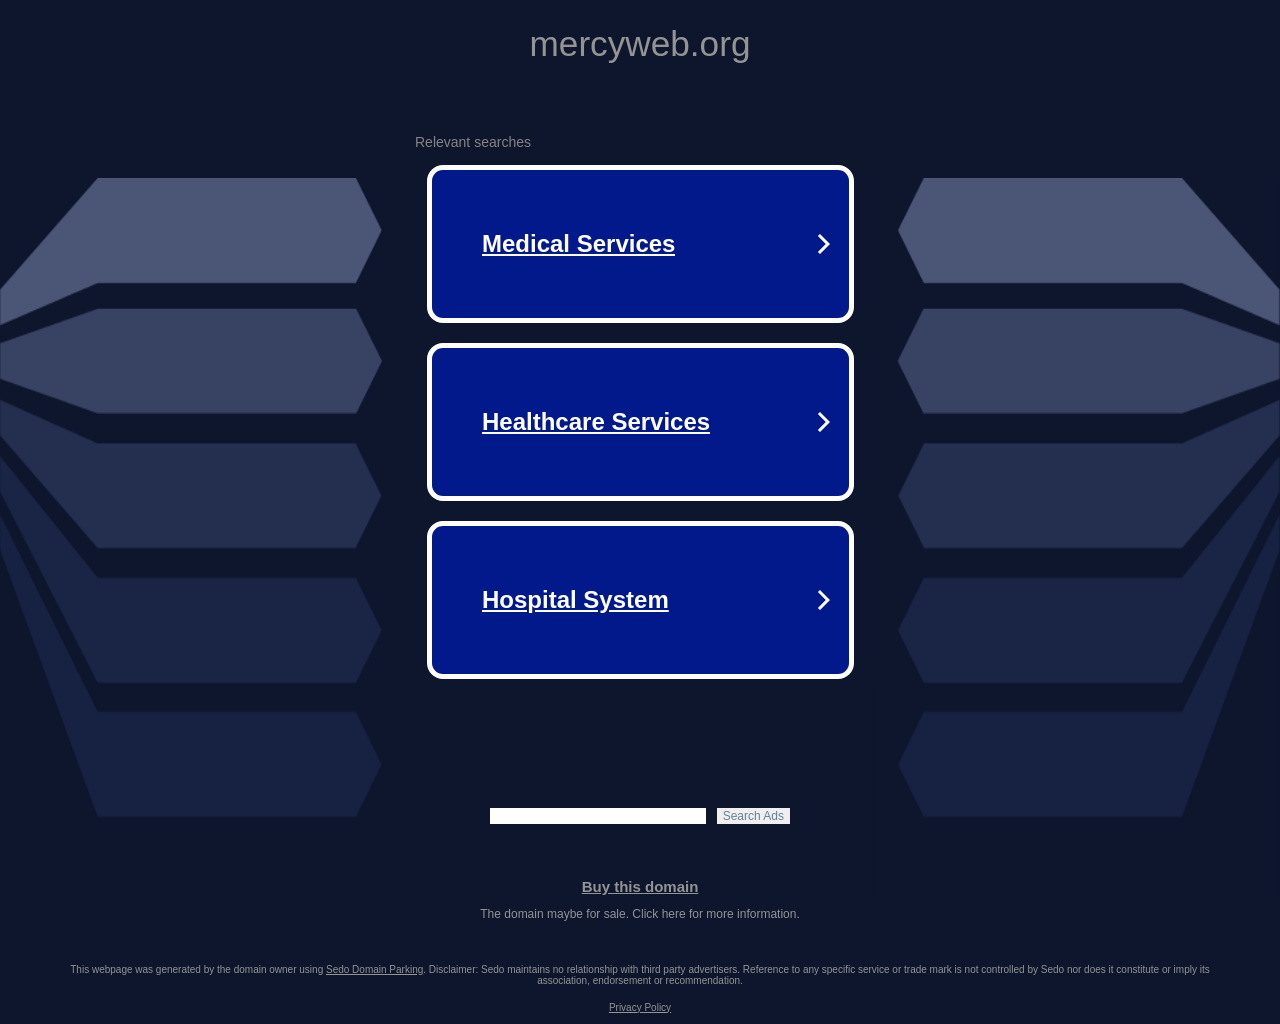 mercyweb.org